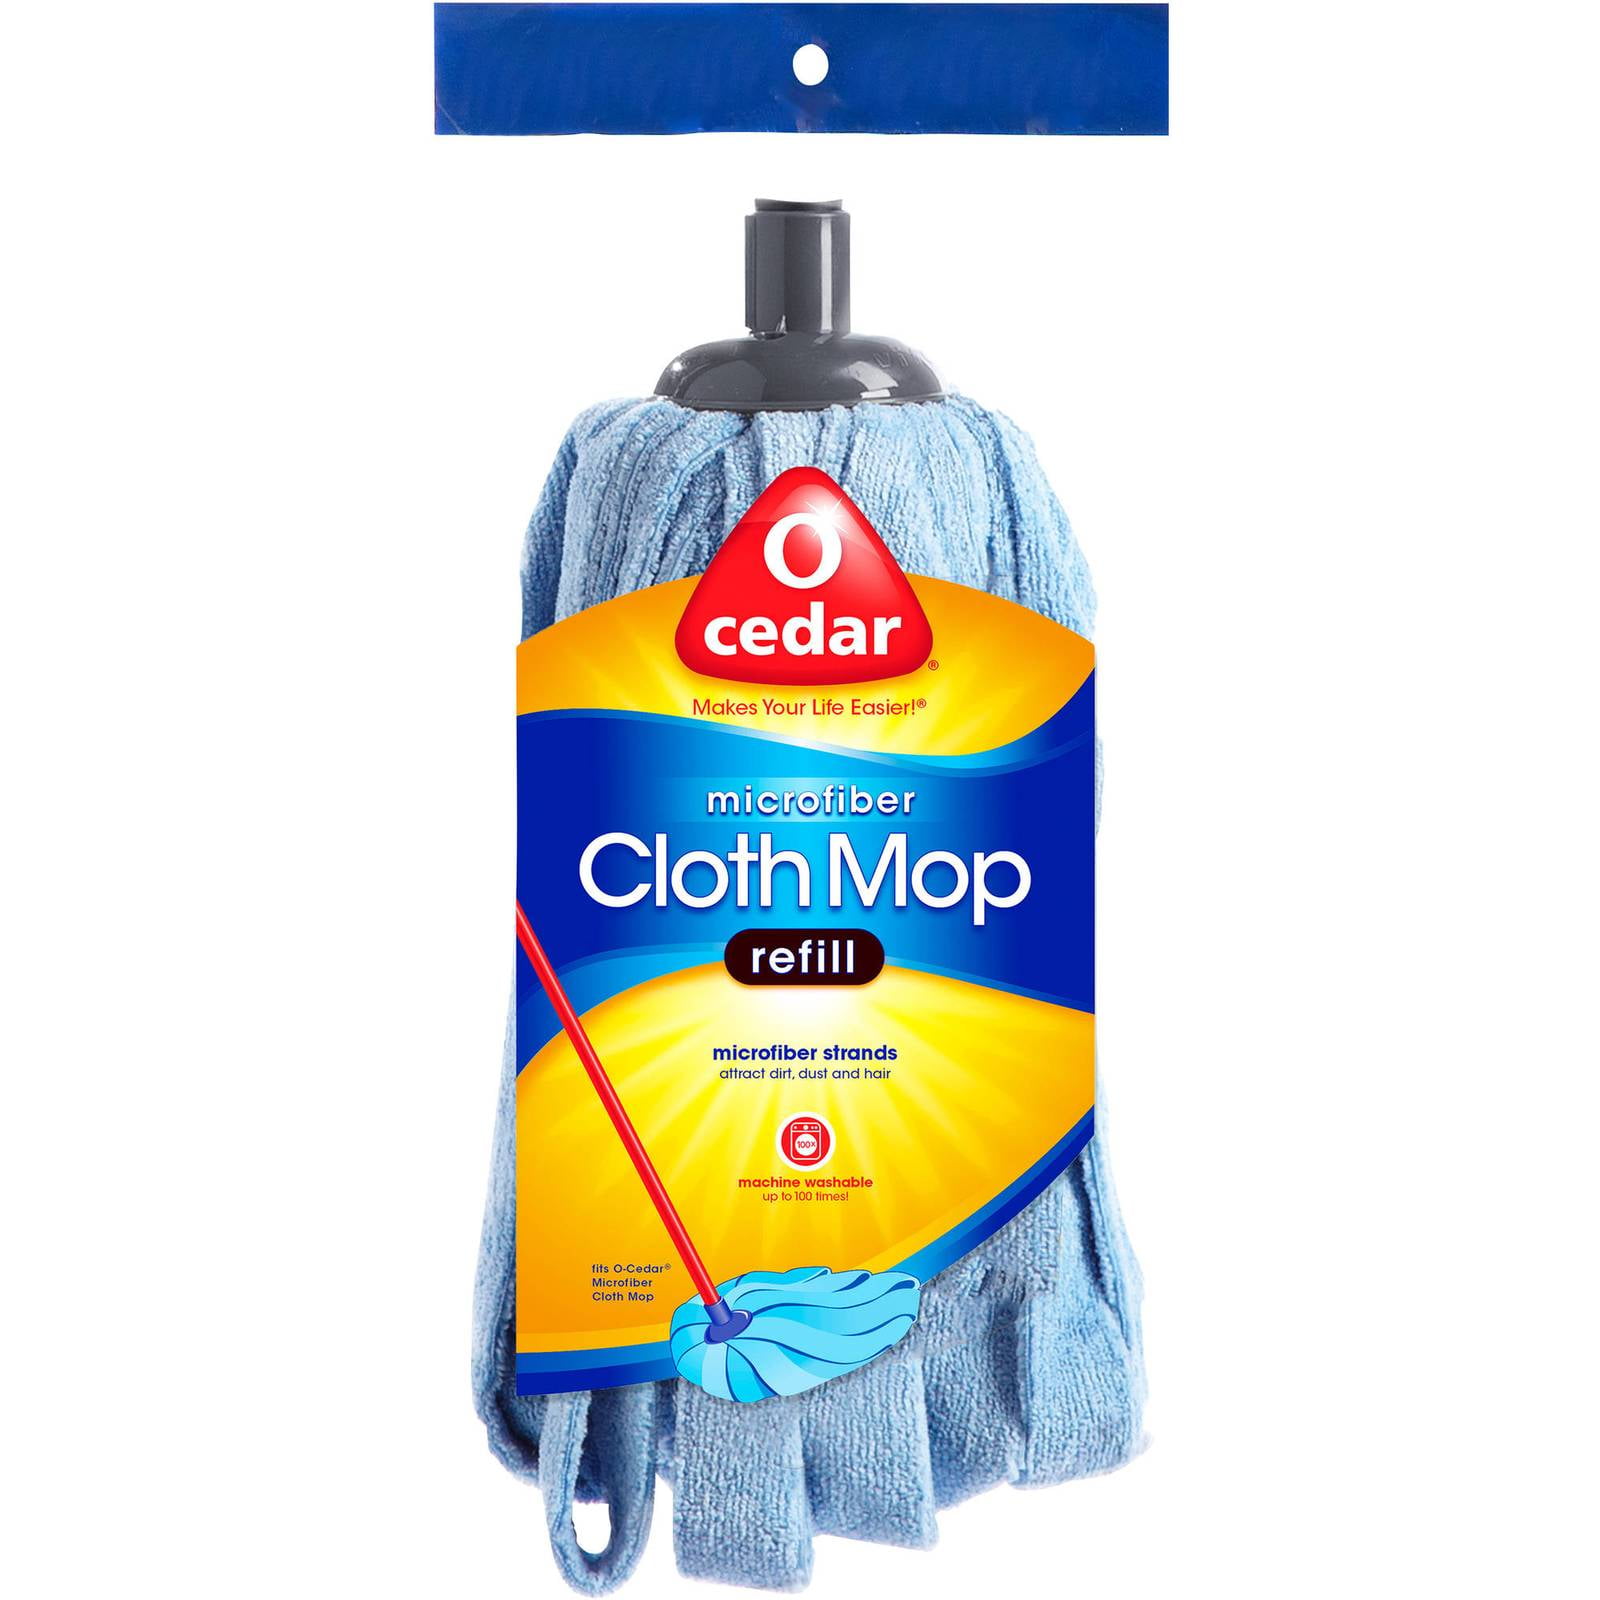 O-Cedar Microfiber Cloth Mop Refill Pack of 4 150219